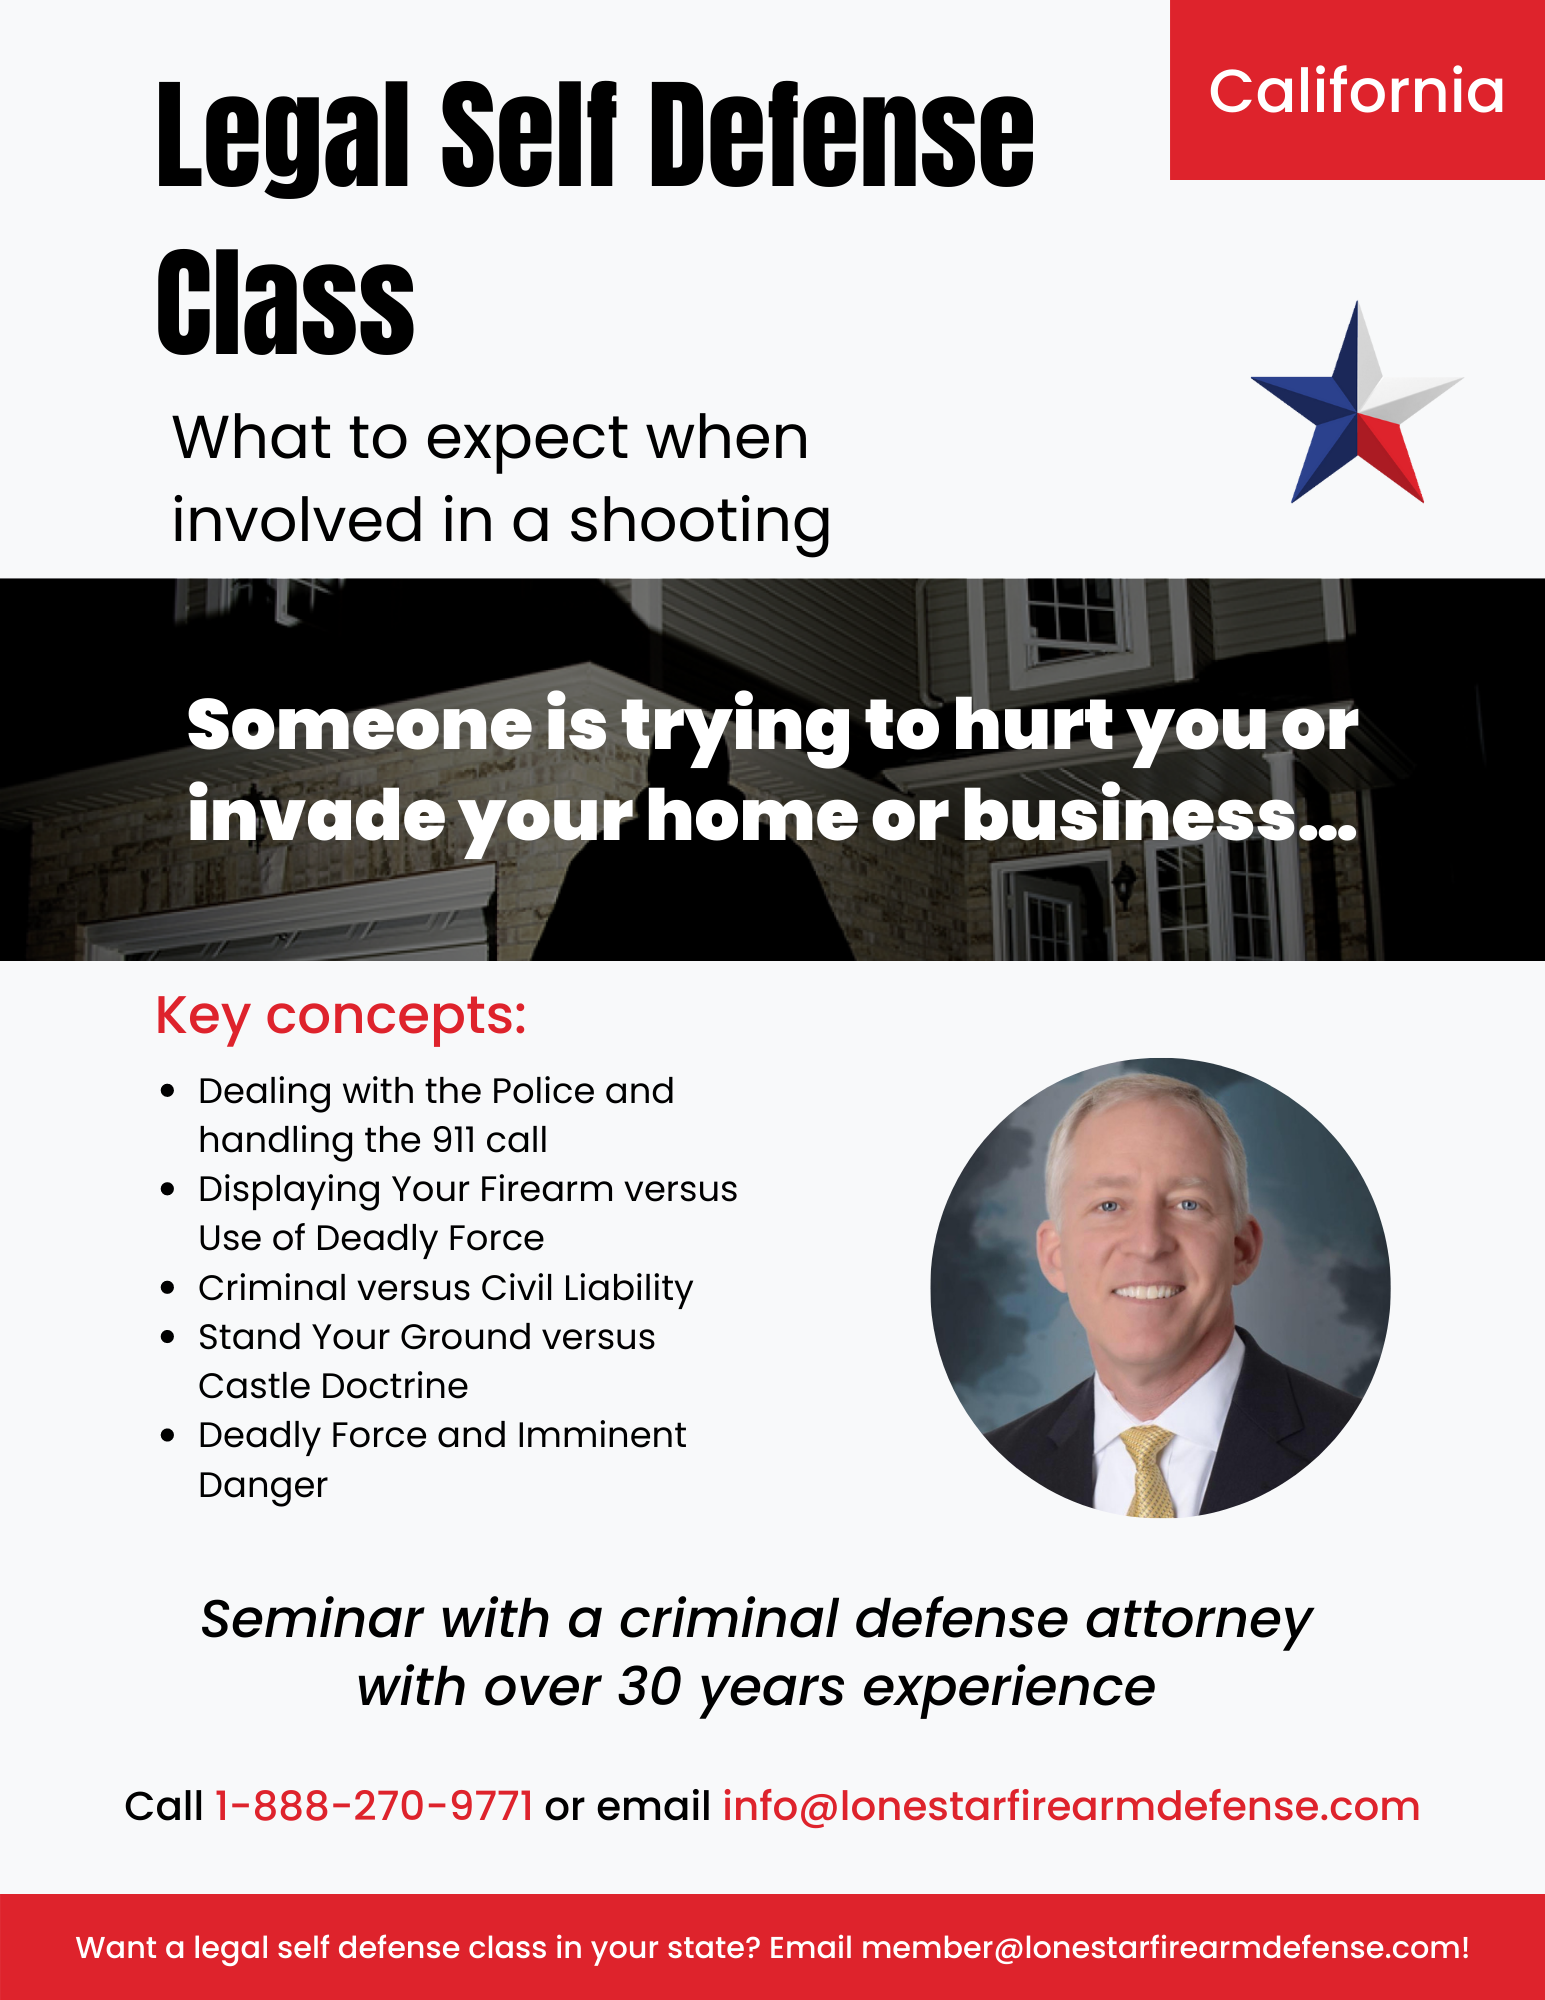 Legal firearm self defense class